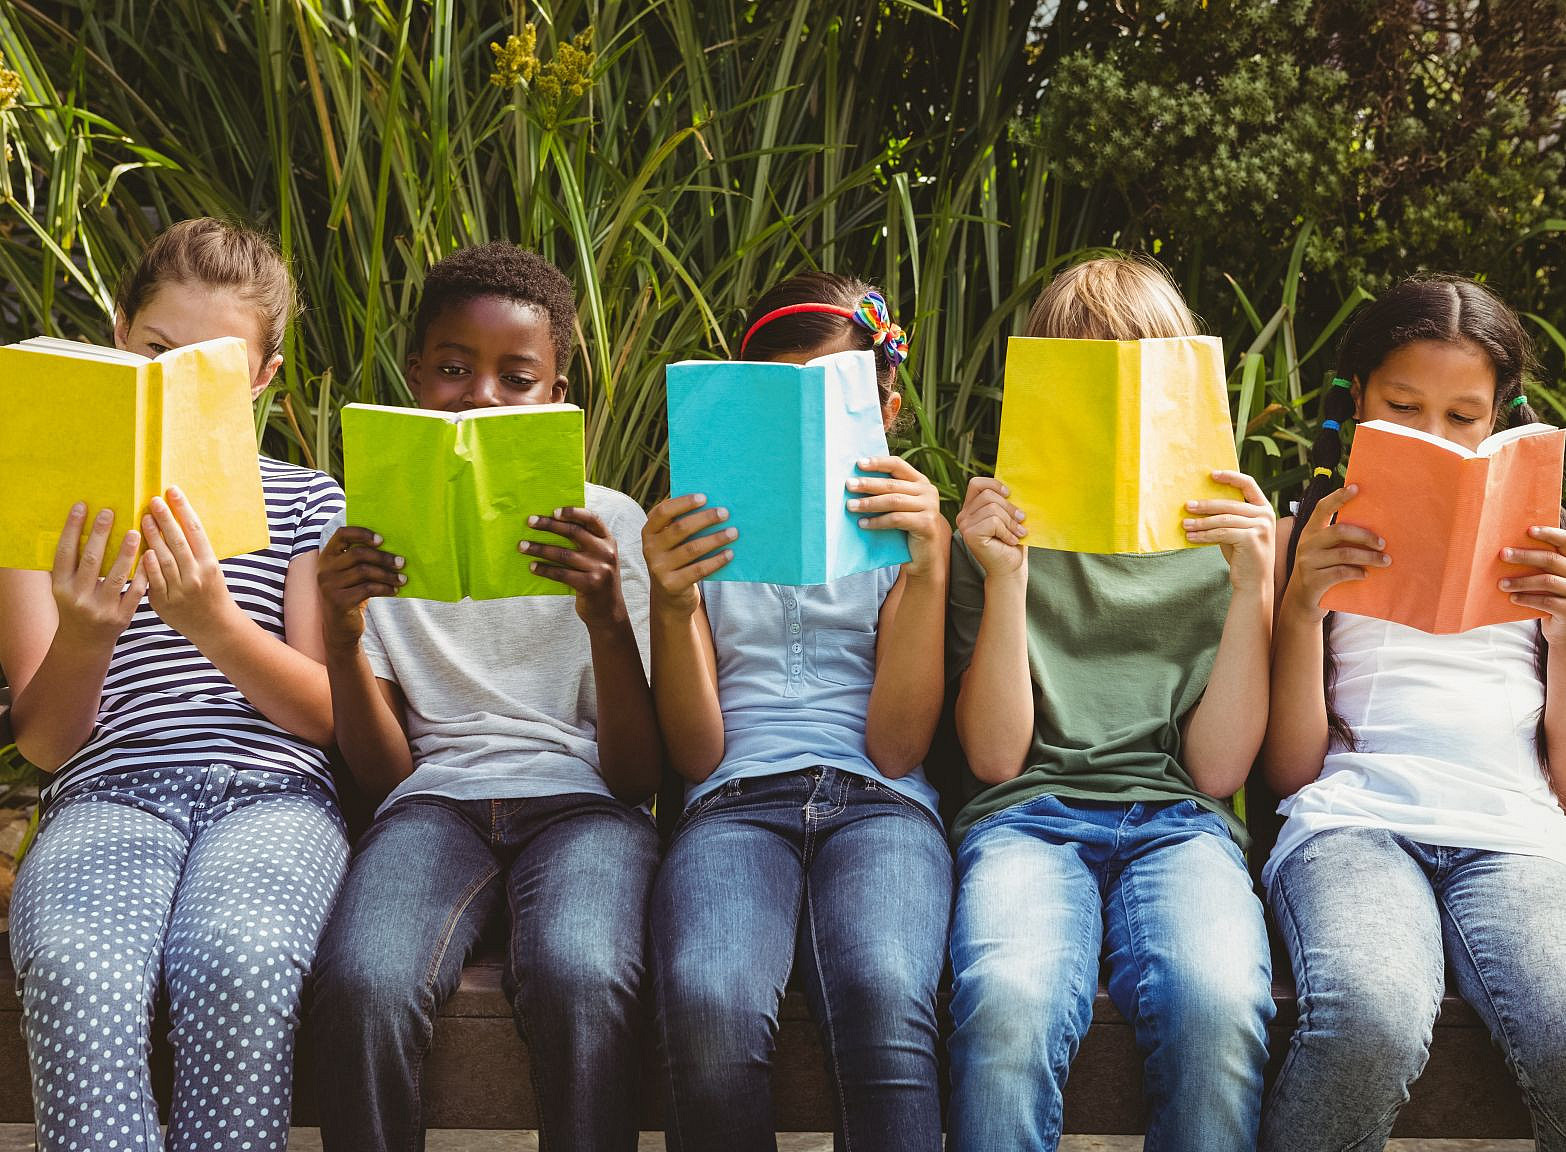 Children reading books at park ©WavebreakmediaMicro by Adobe Stock